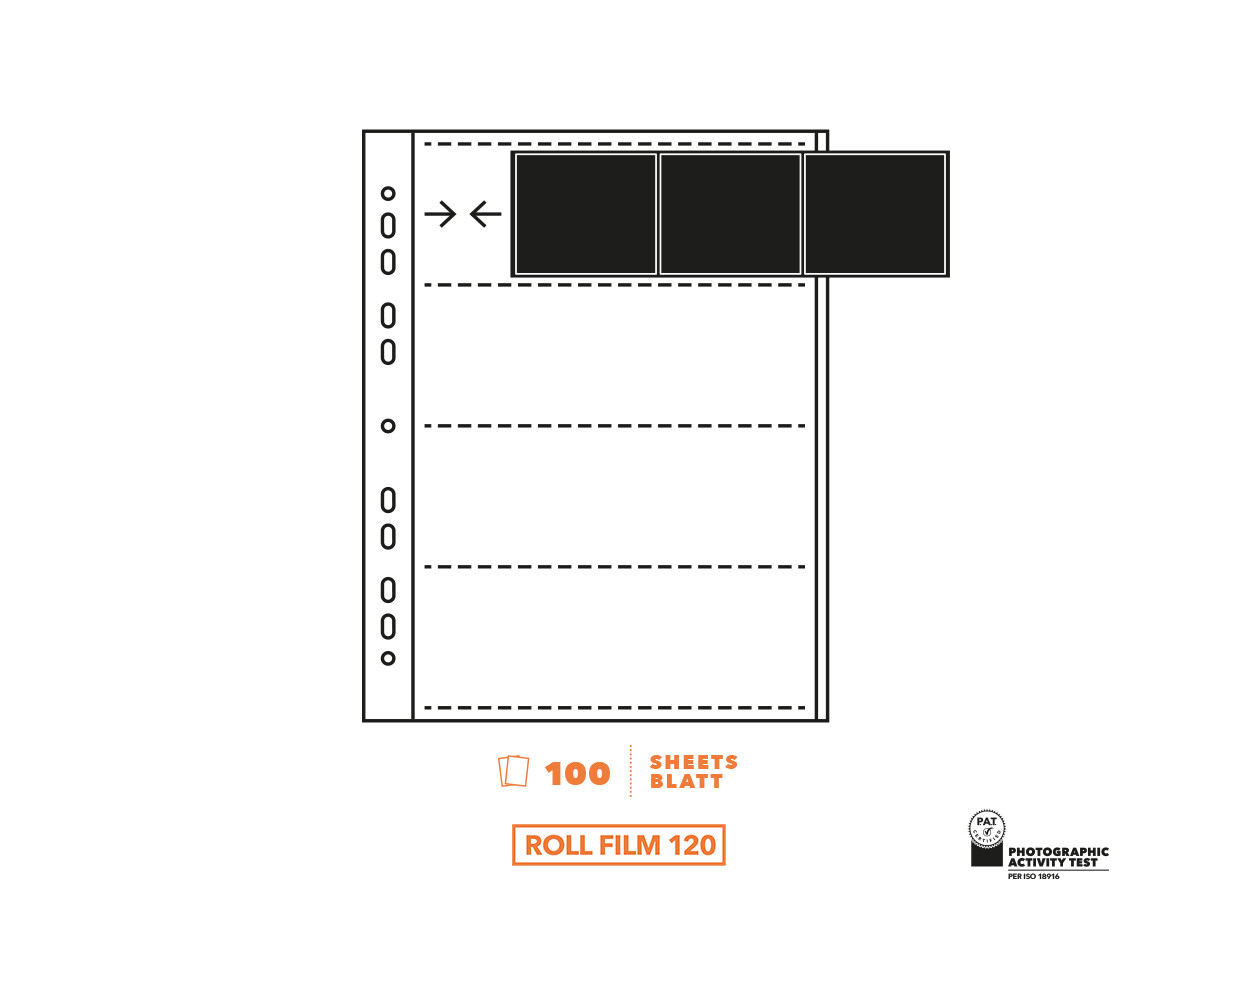 Peva Pergamin negative sleeves for 120 roll film (6x6 / 6x7) 50 sheets